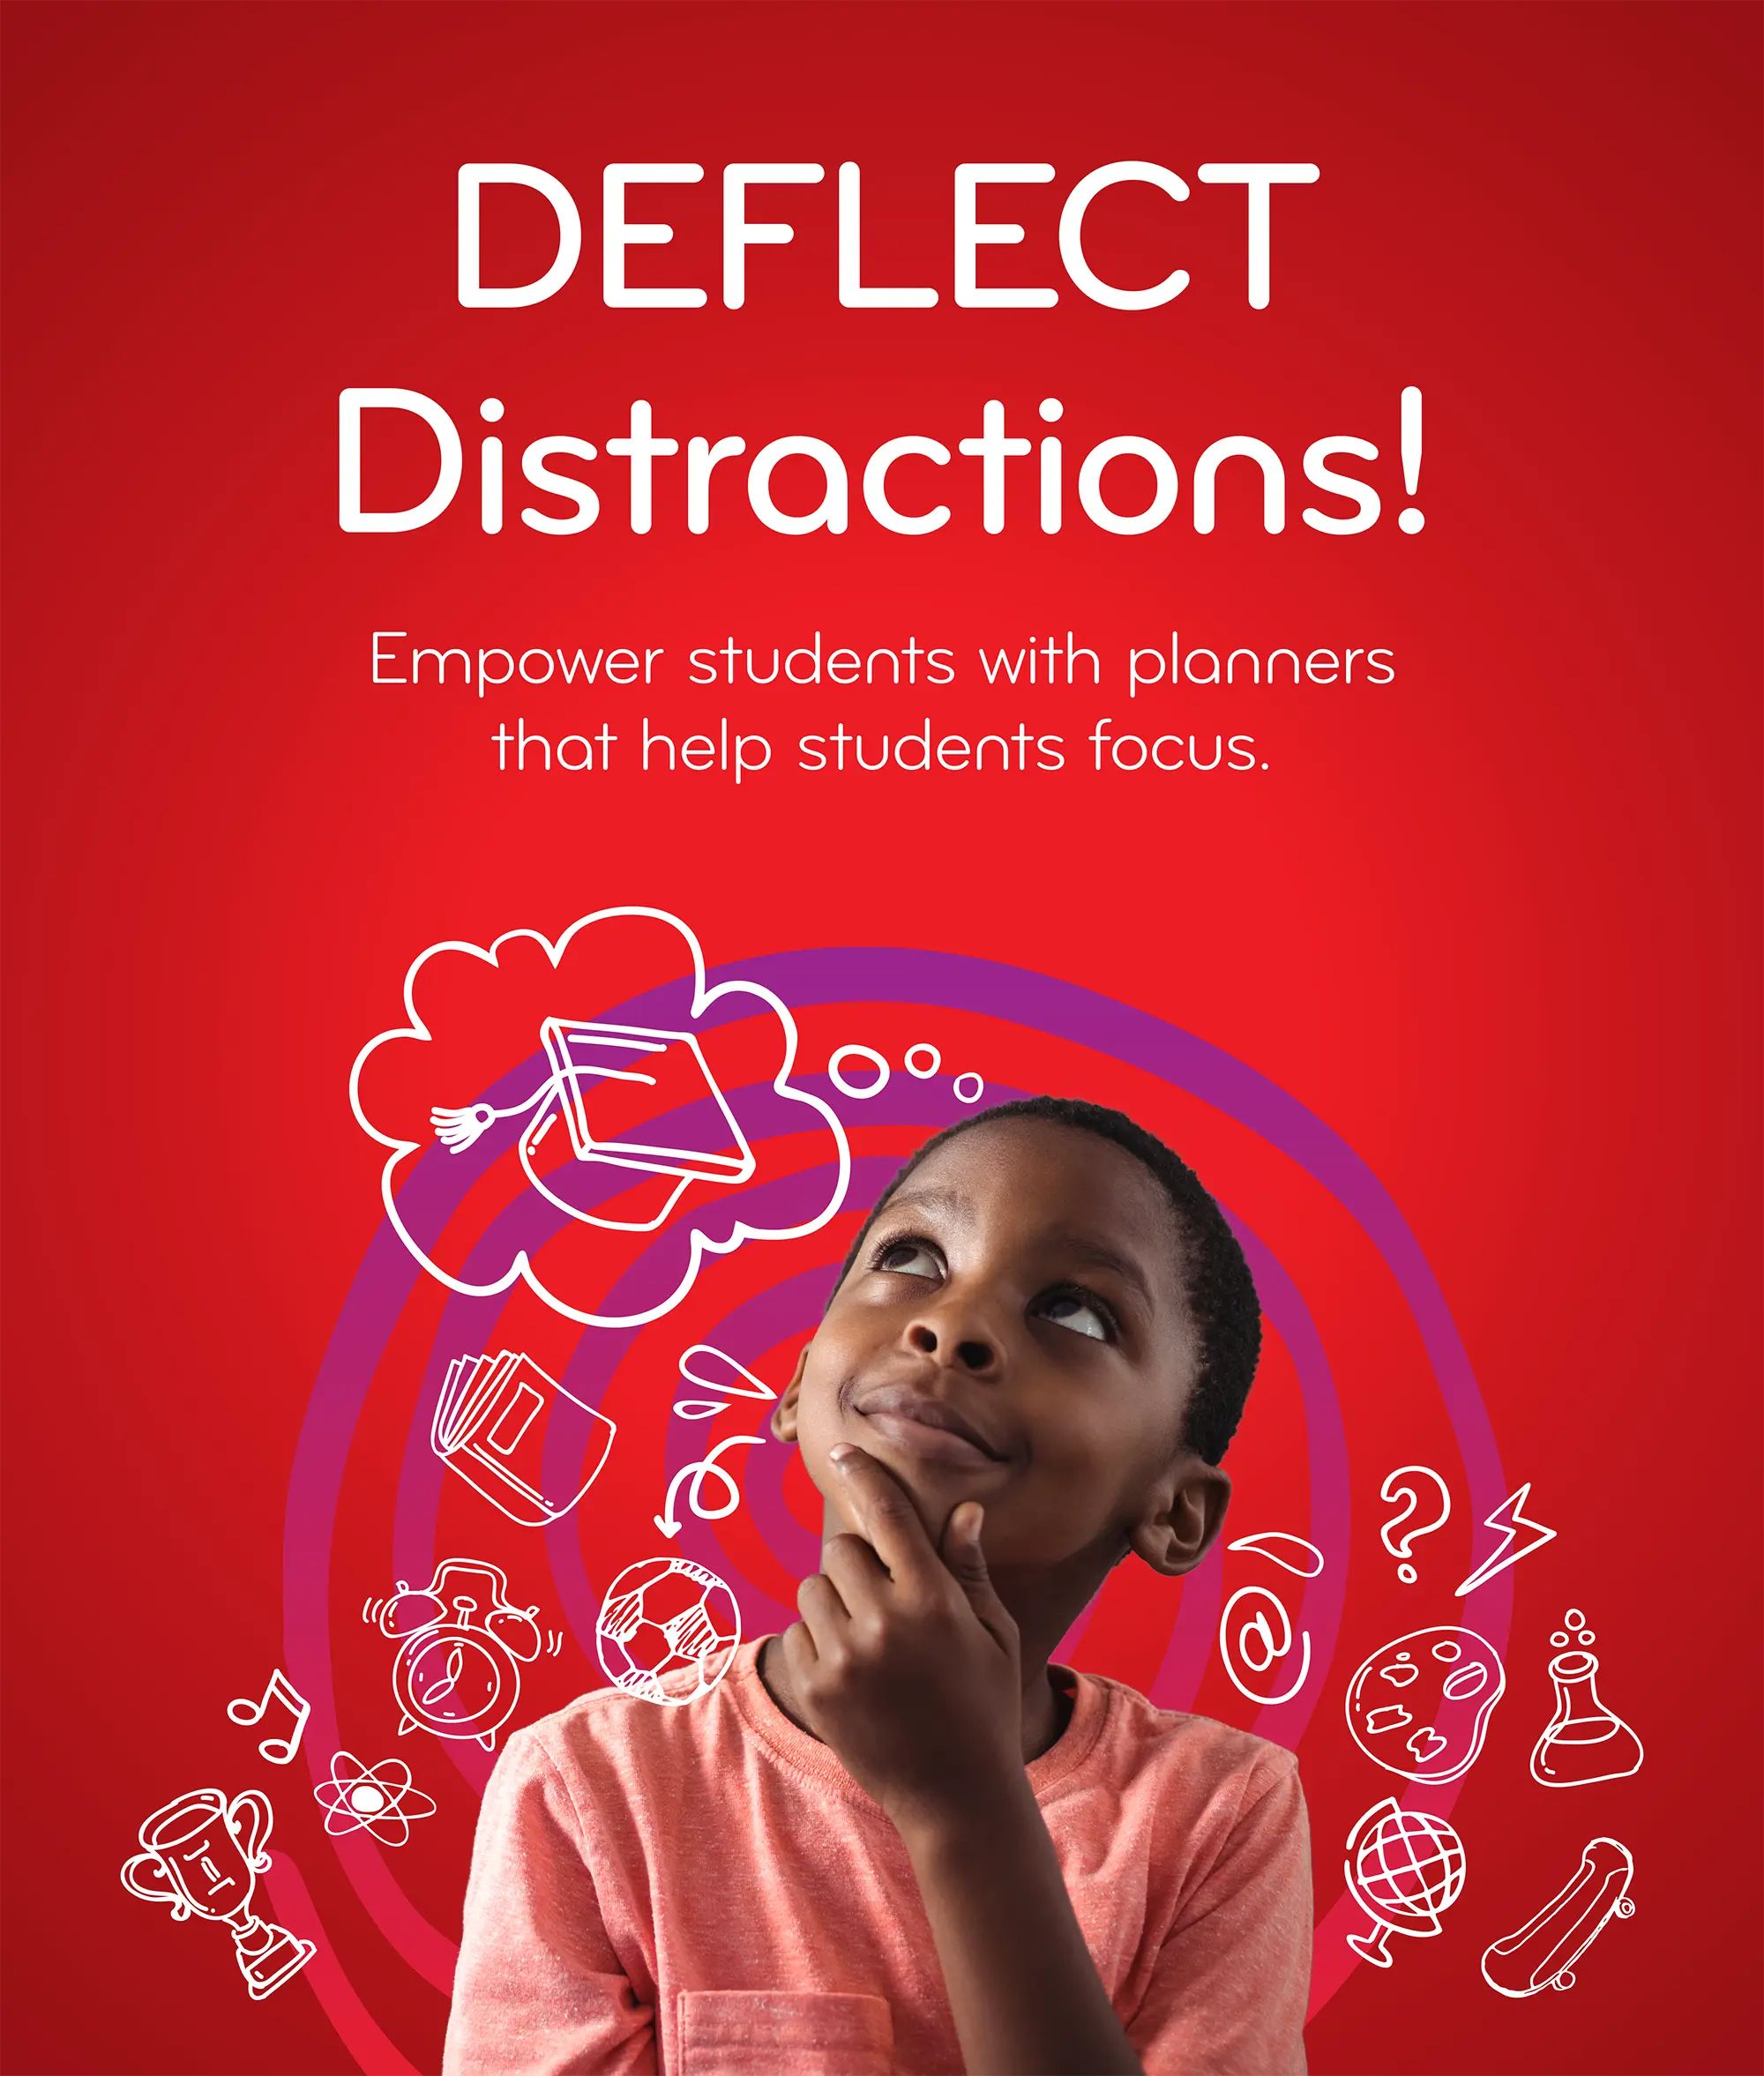 DEFLECT Distractions!